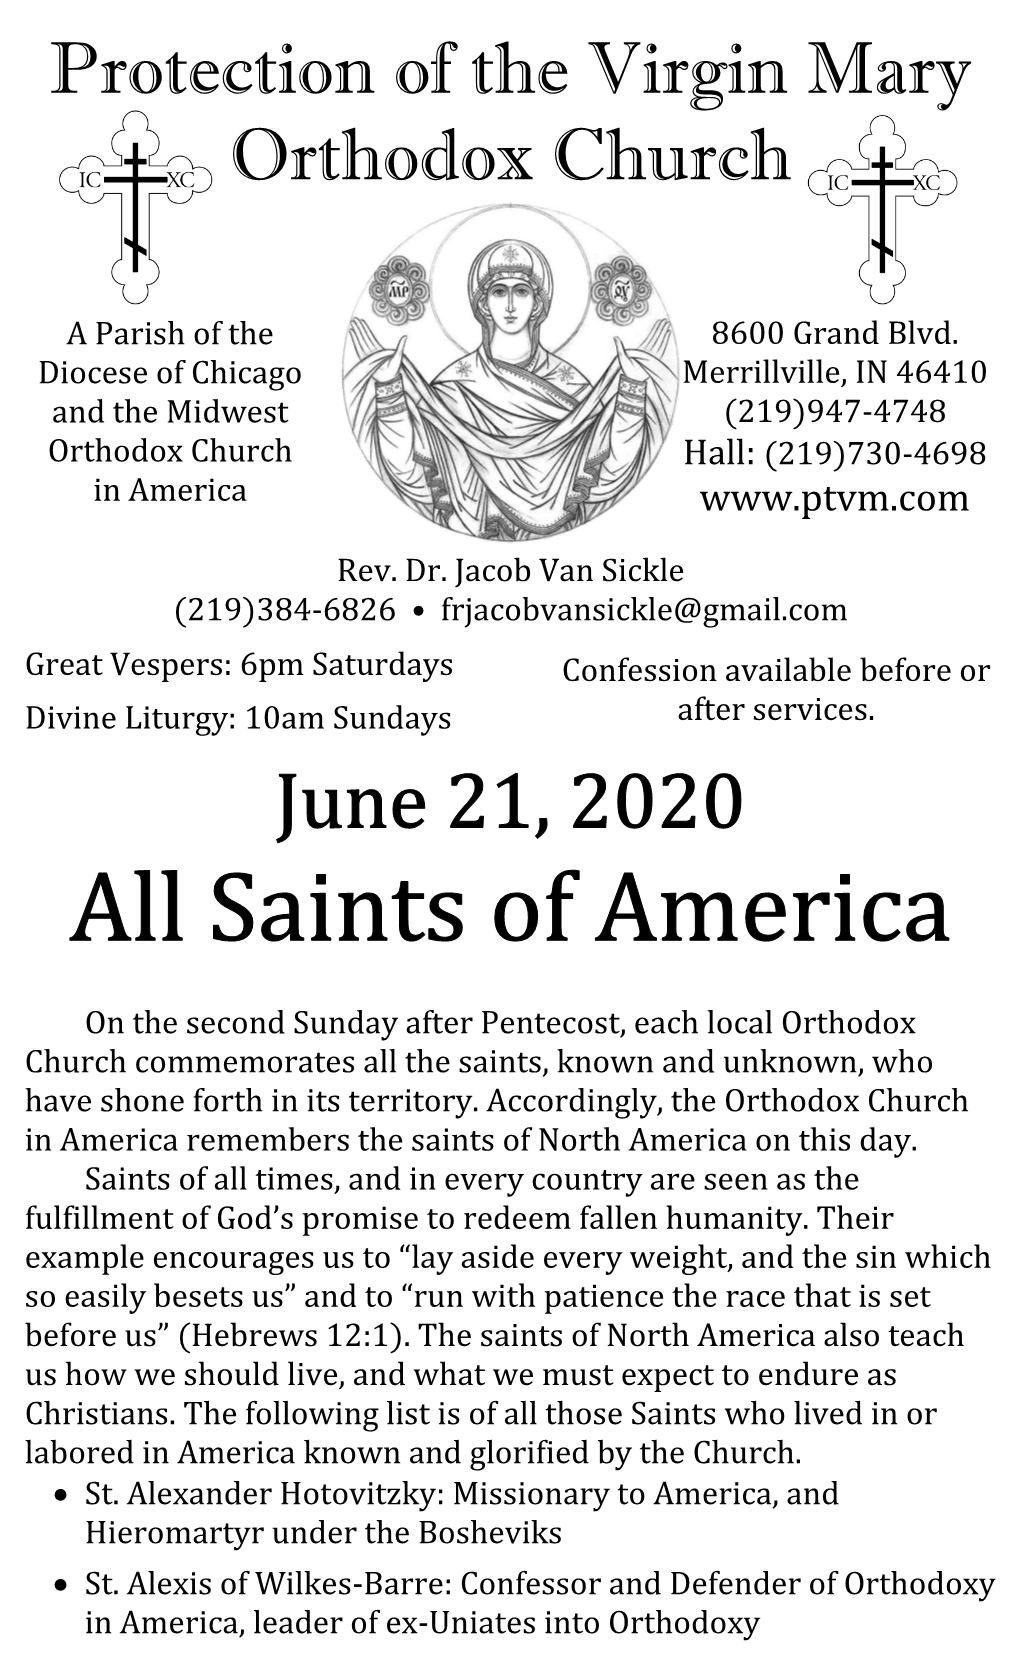 June 21, 2020 All Saints of America